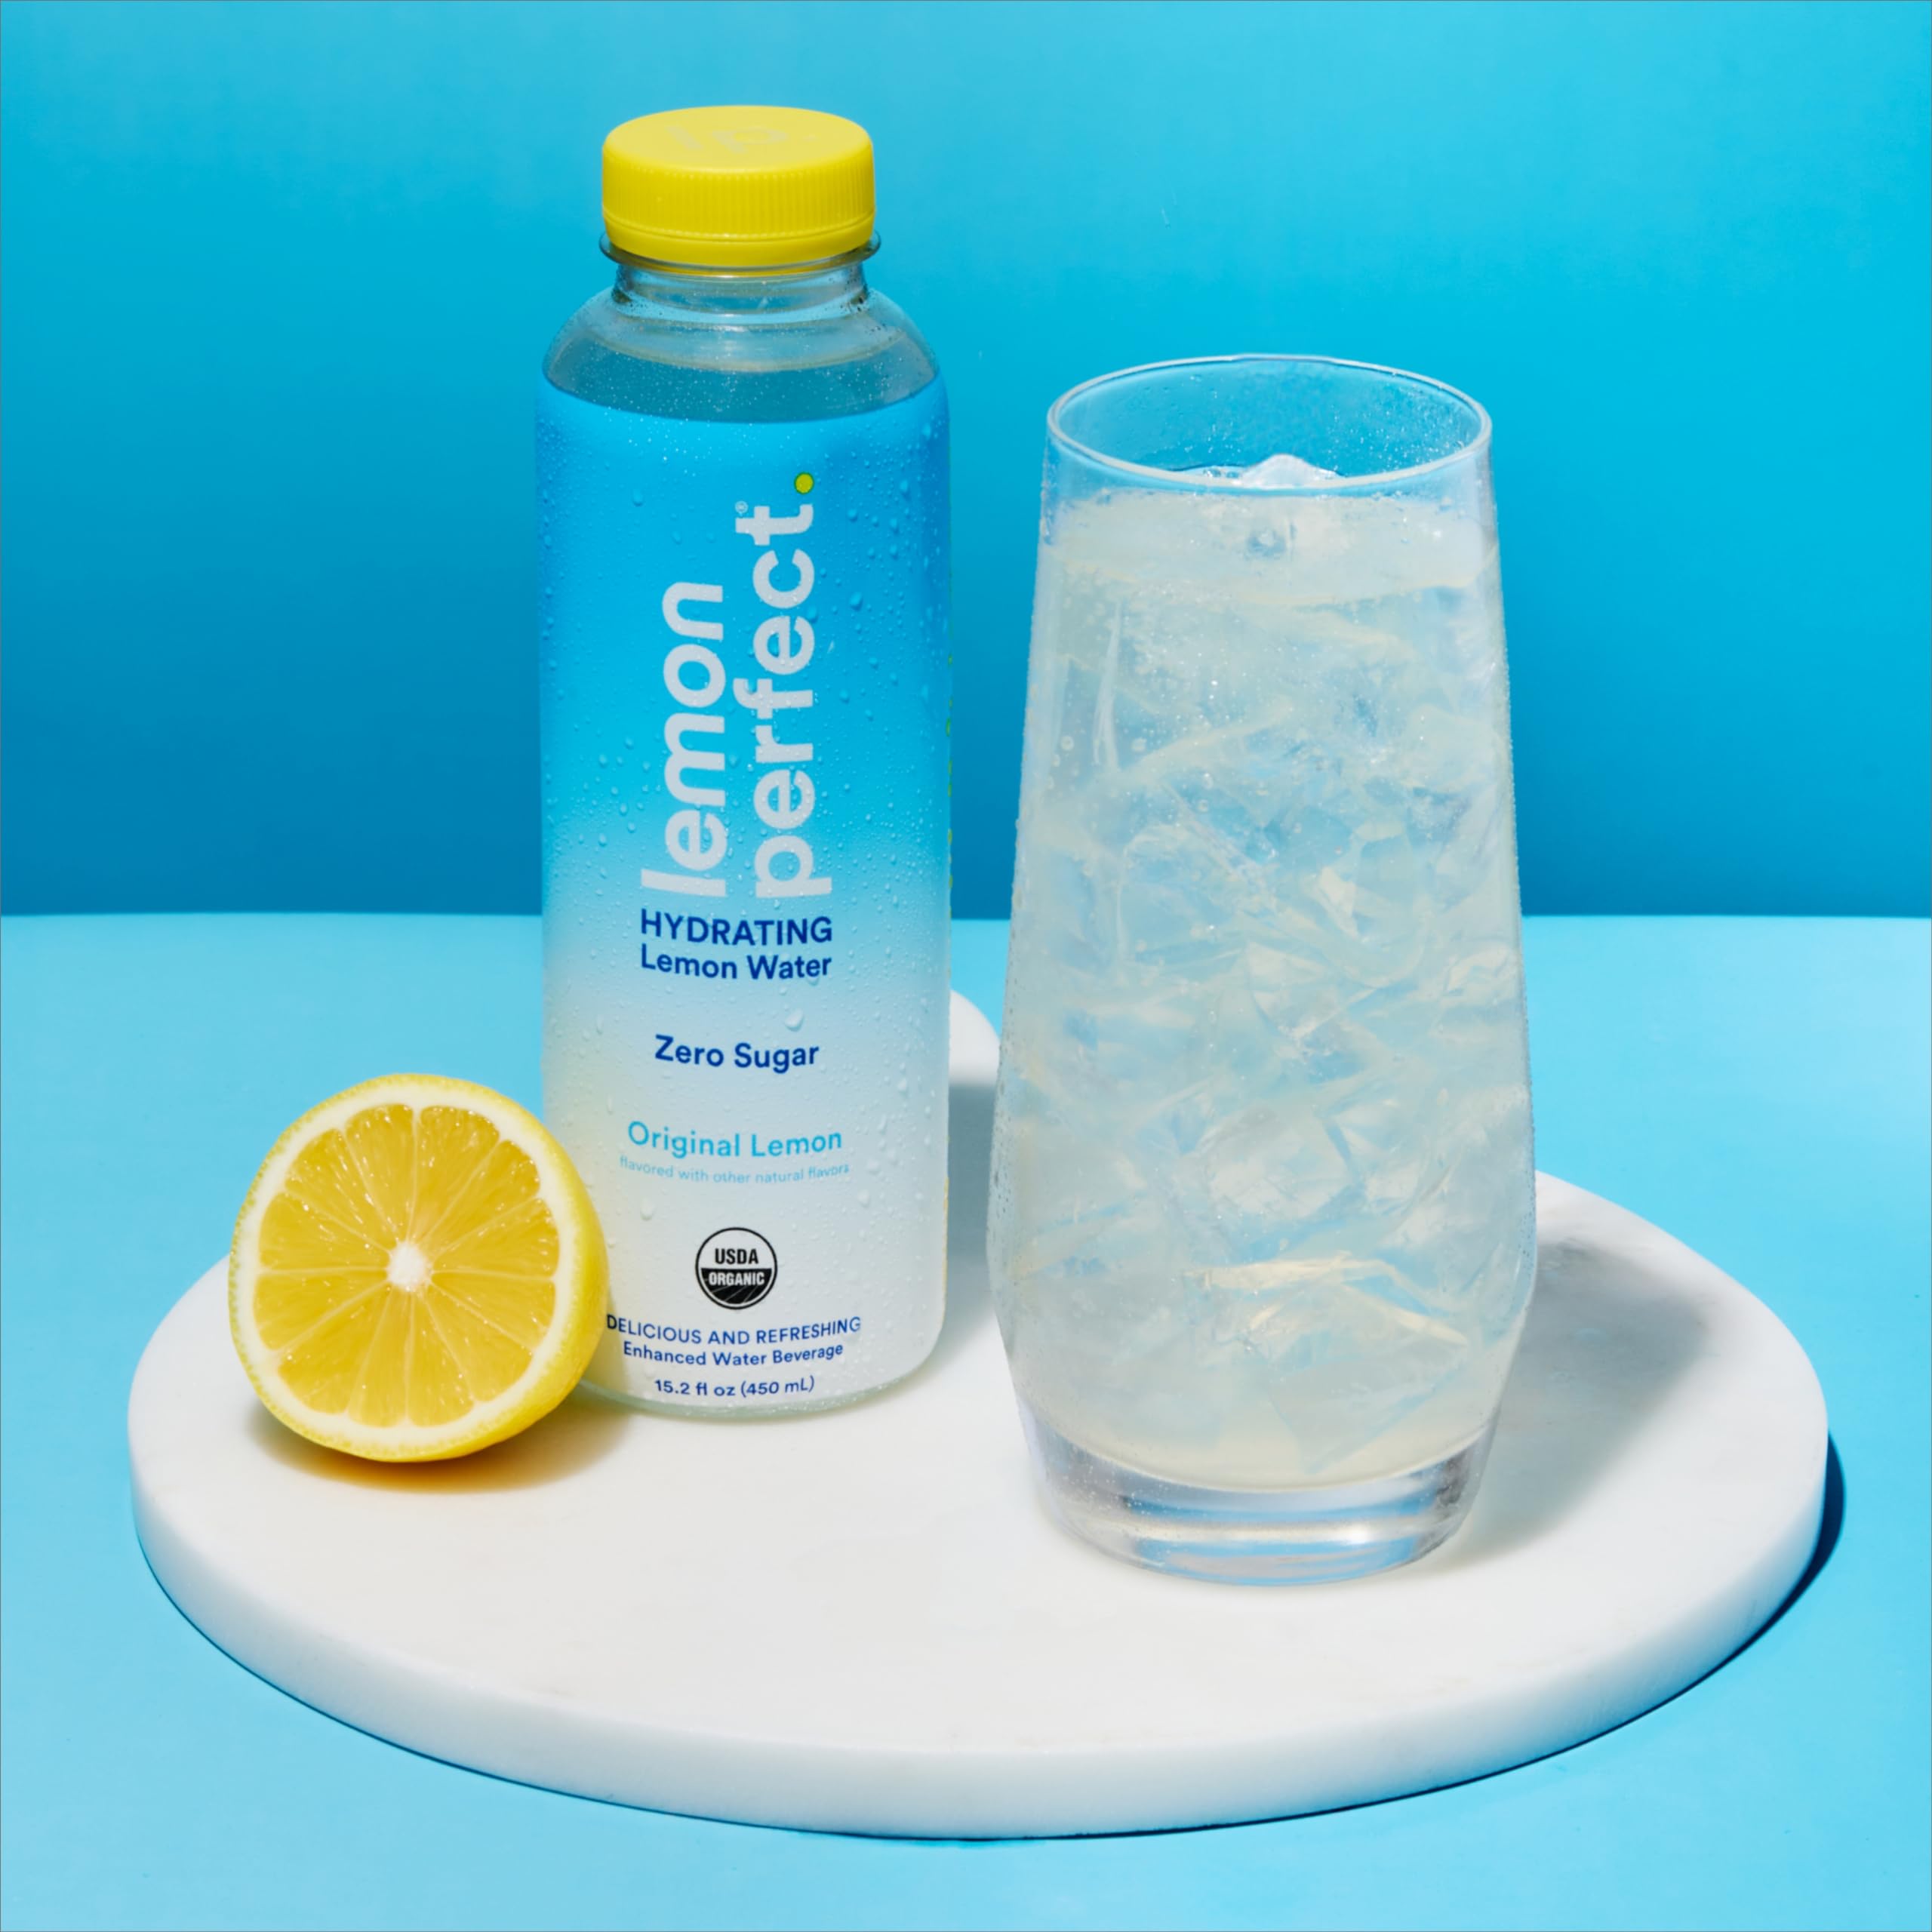 12-Pack 15.2-Oz Lemon Perfect Hydrating Flavored Lemon Water (Original Lemon) $12.02 w/ S&S + Free Shipping w/ Prime or on $35+